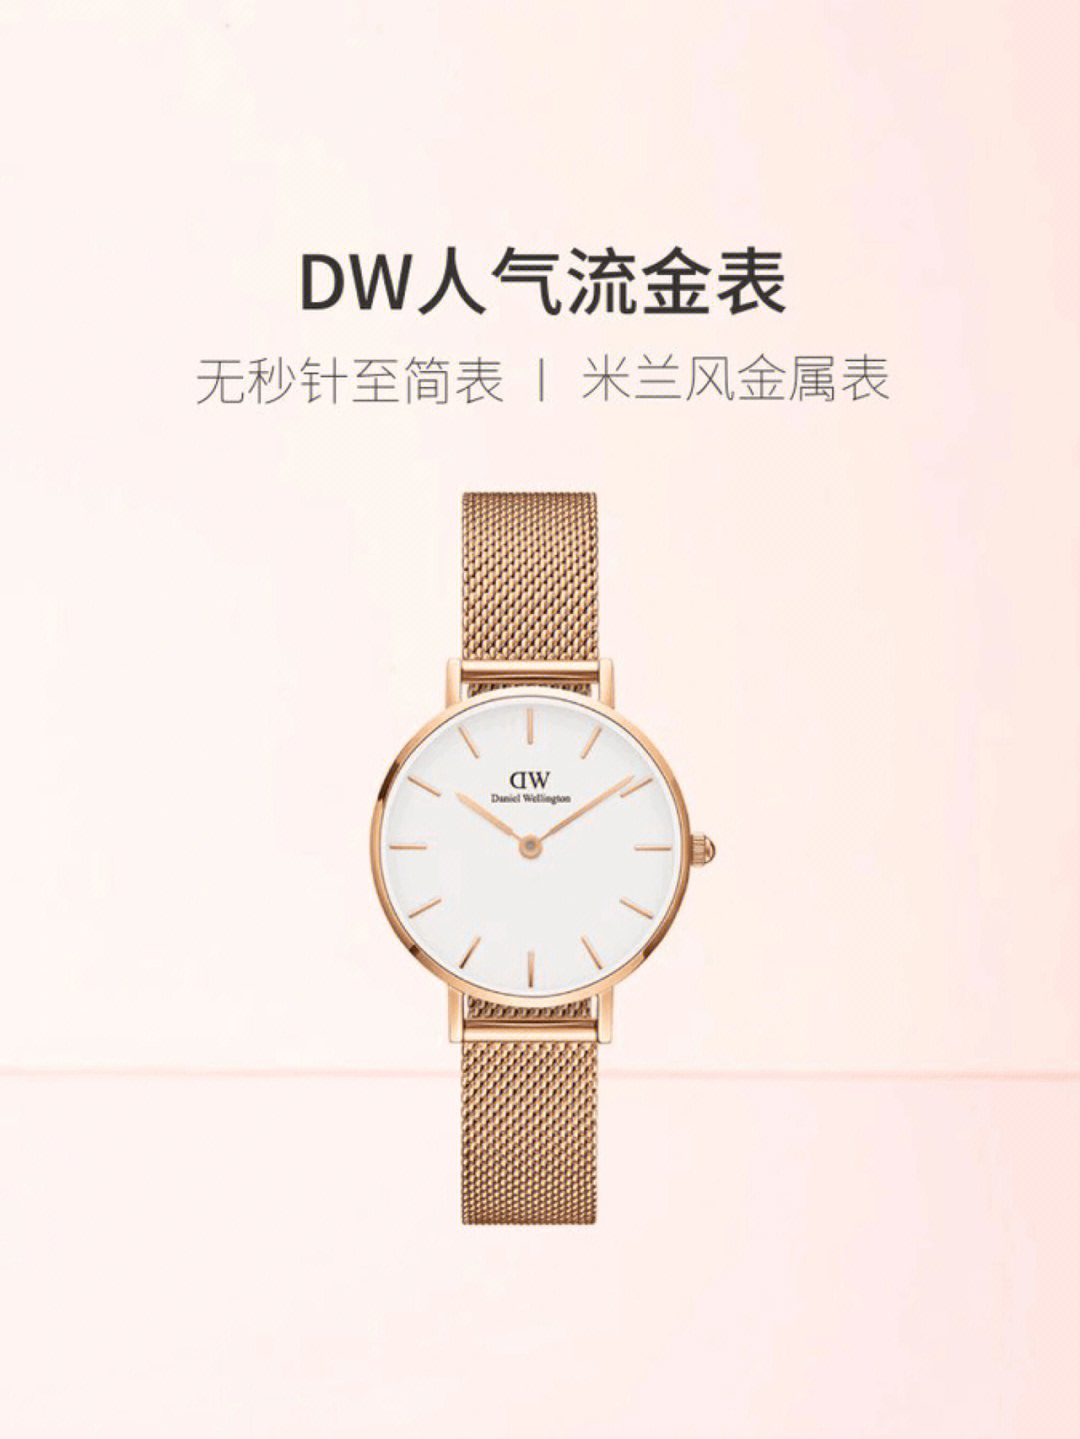 dw手表的含义寓意图片